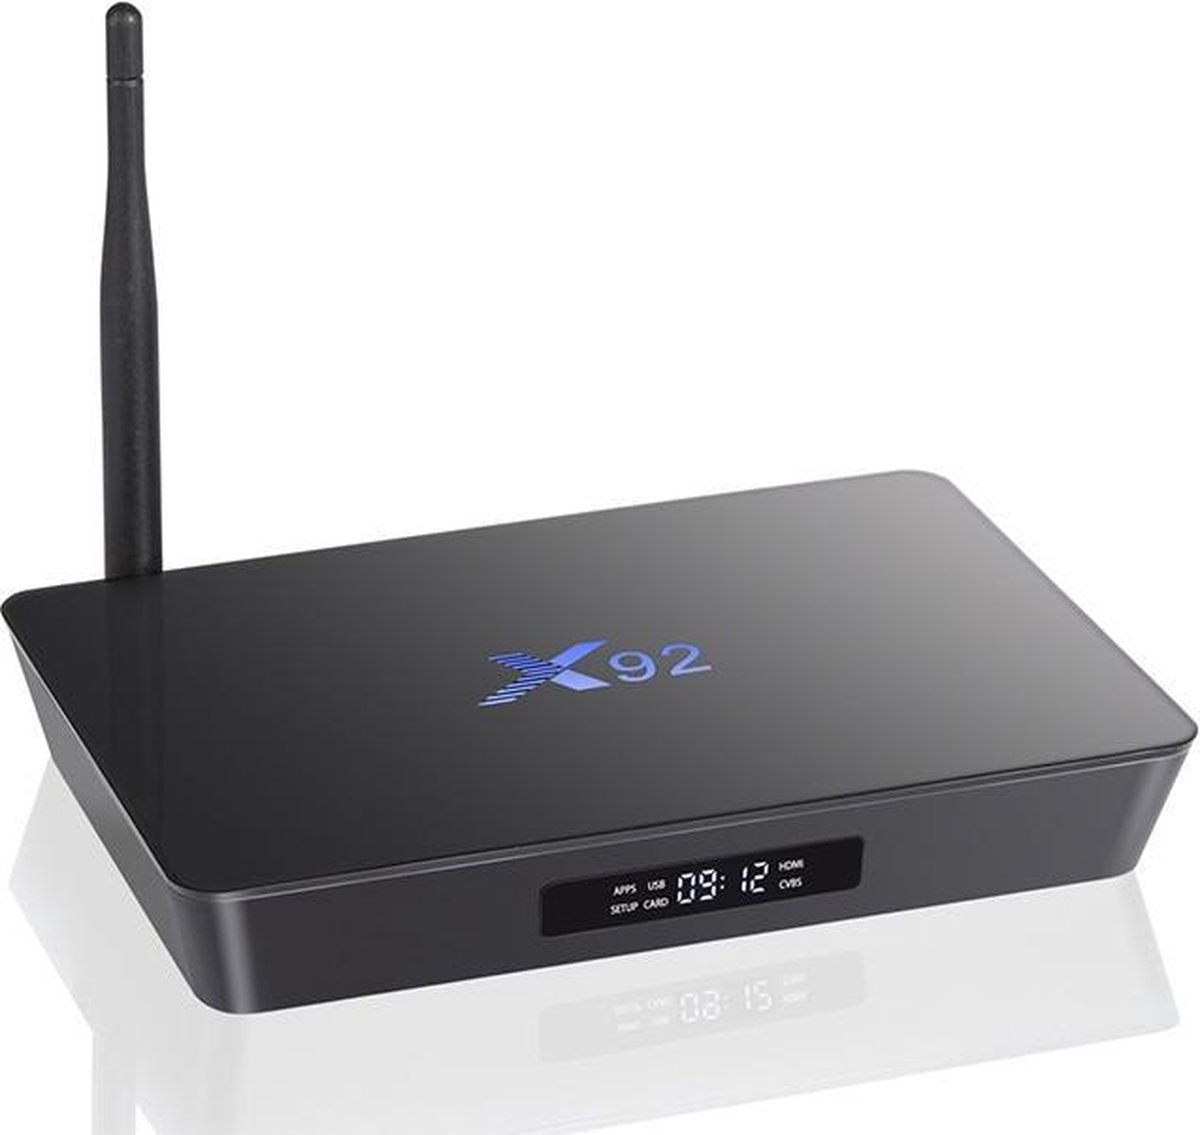 Android TV Box - X92 - 16GB - Plug & Play aansluiting | bol.com